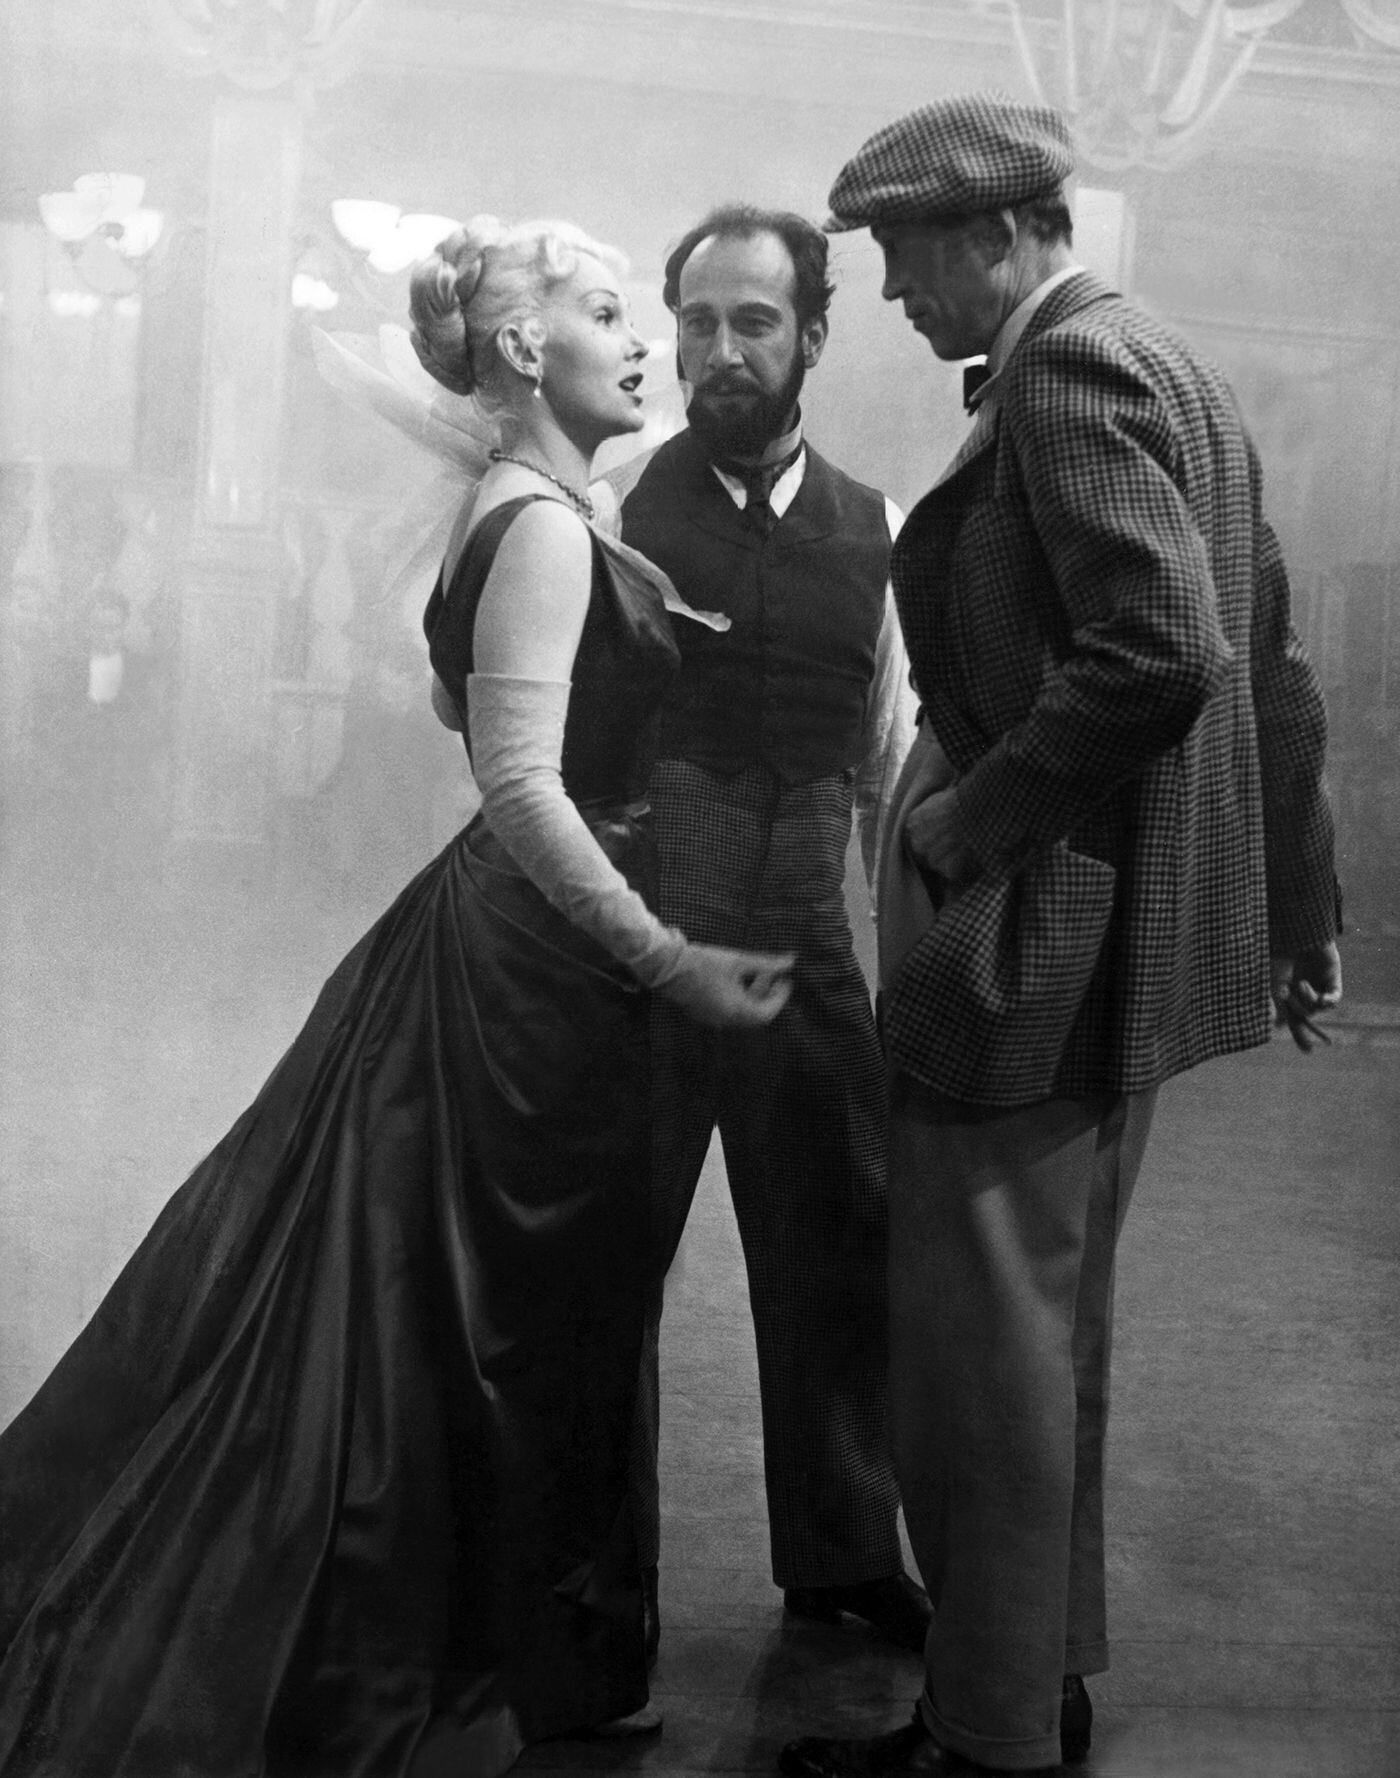 Zsa Zsa Gabor, José Ferrer (Toulouse-Lautrec en el filme) y el director John Huston, en el rodaje de ‘Moulin Rouge’.